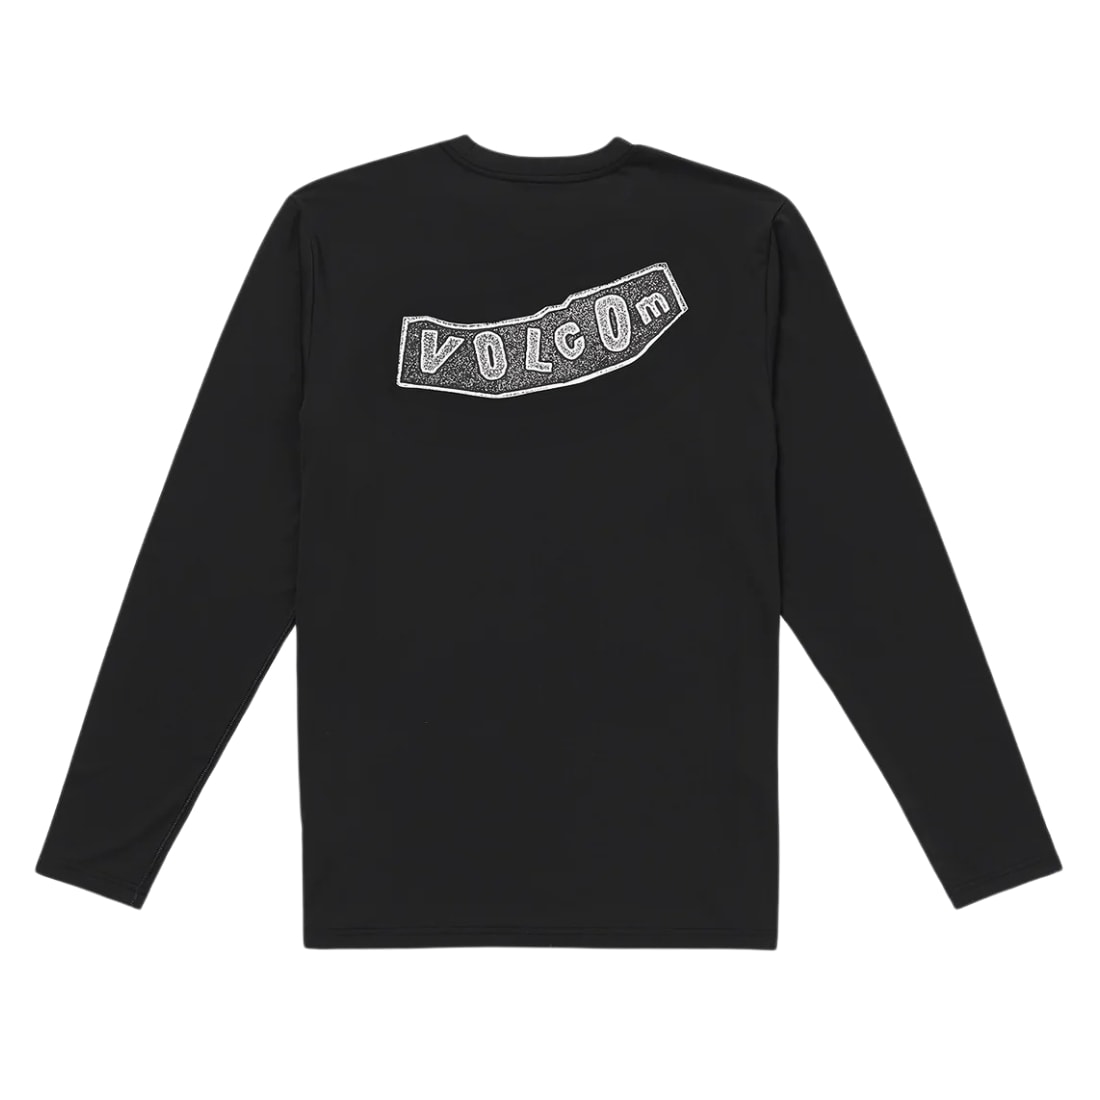 Volcom Stone Pistol Longsleeve T-Shirt - Black - Mens Graphic T-Shirt by Volcom